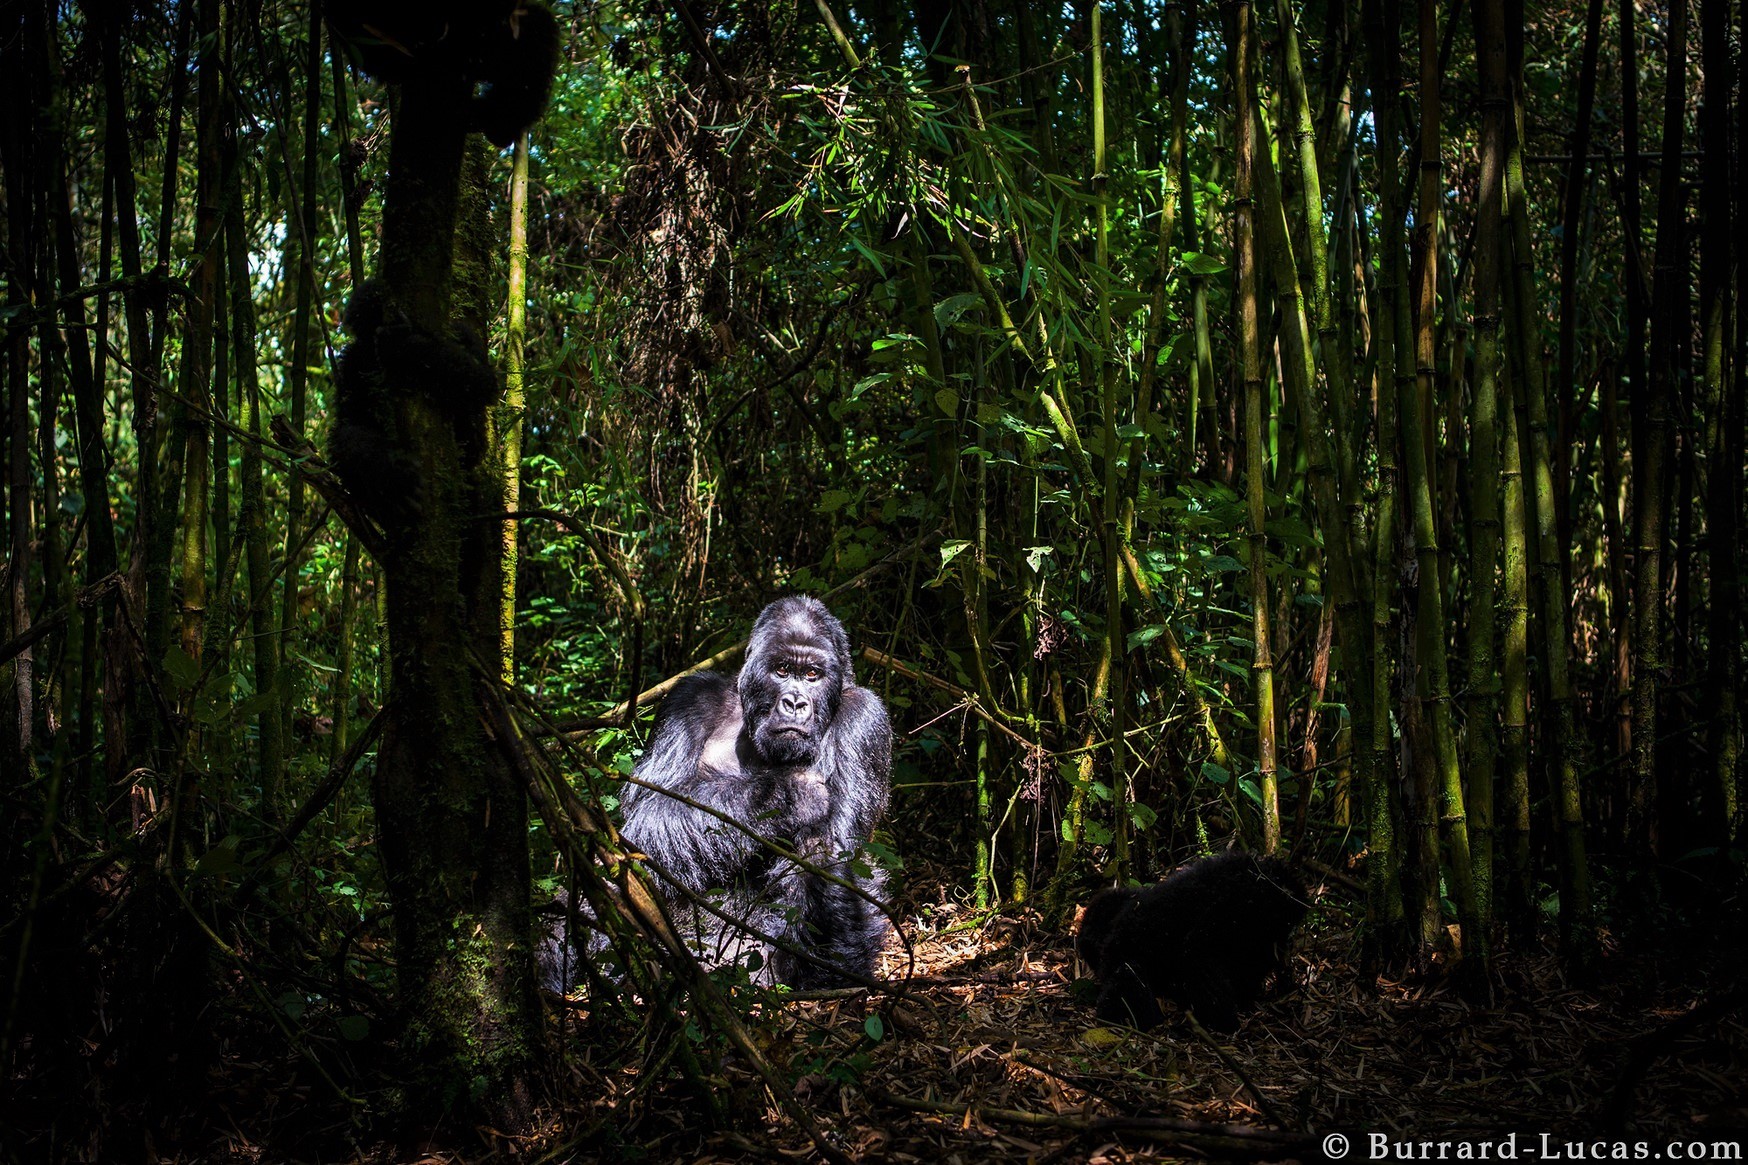 Gorilla in the Jungle by Will Burrard Lucas